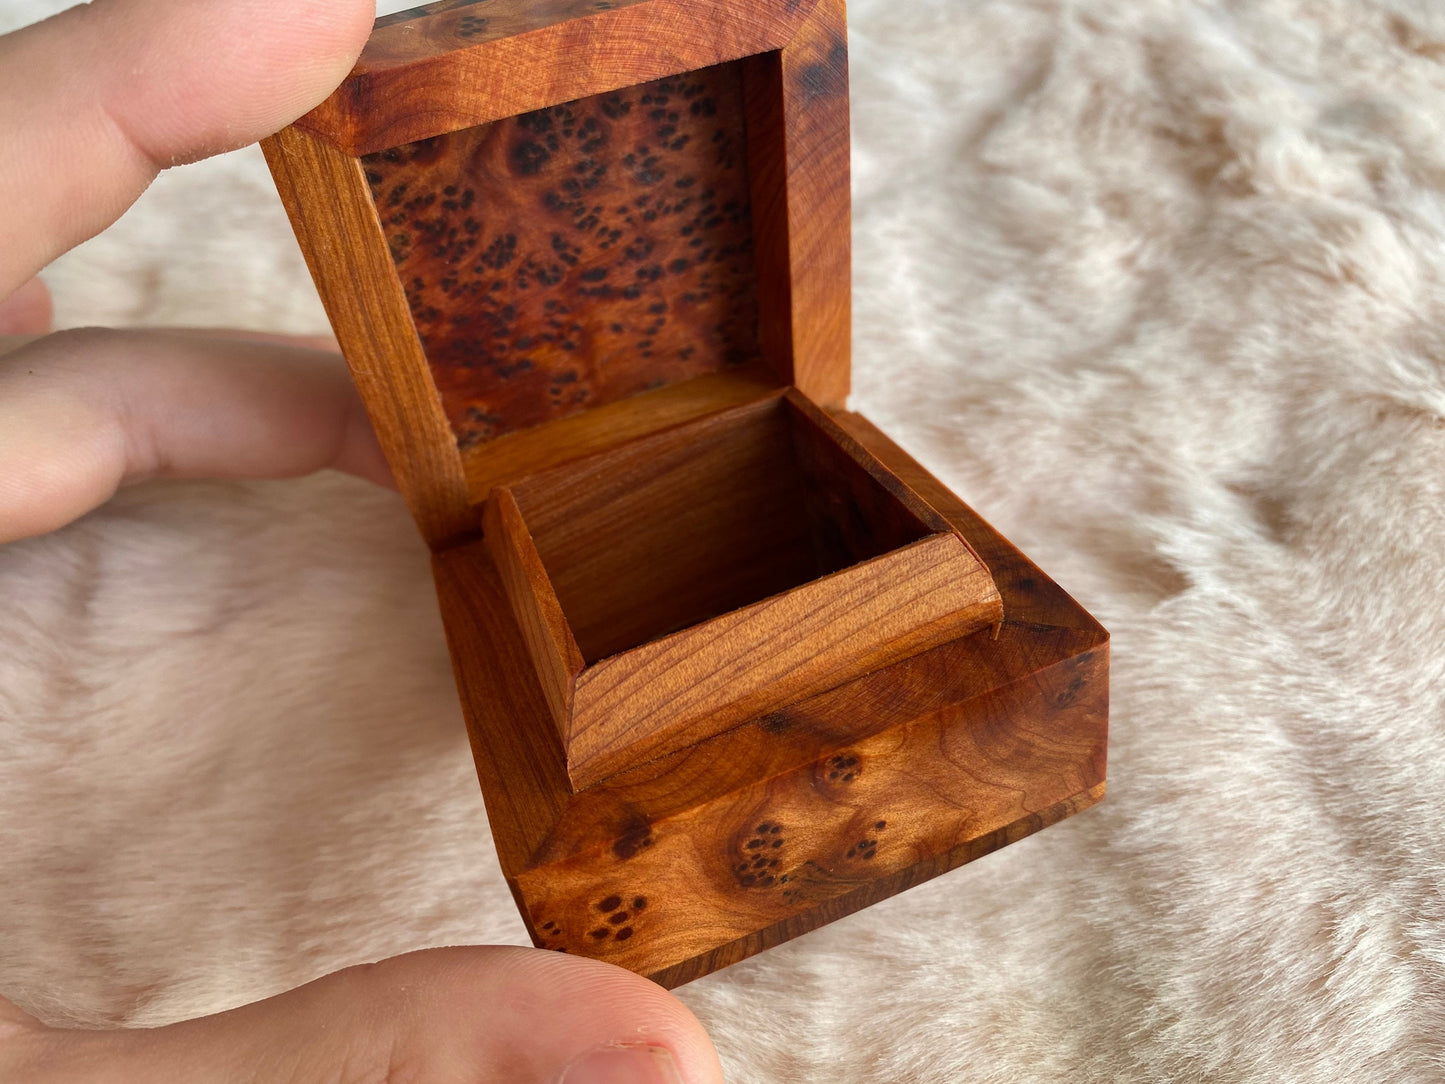 2"x2" Morrocan thuya wooden wedding ring box,handmade Ring Box For Keepsake,Engagement Jewelry Storage,Proposal Engraved thuya Ring Box